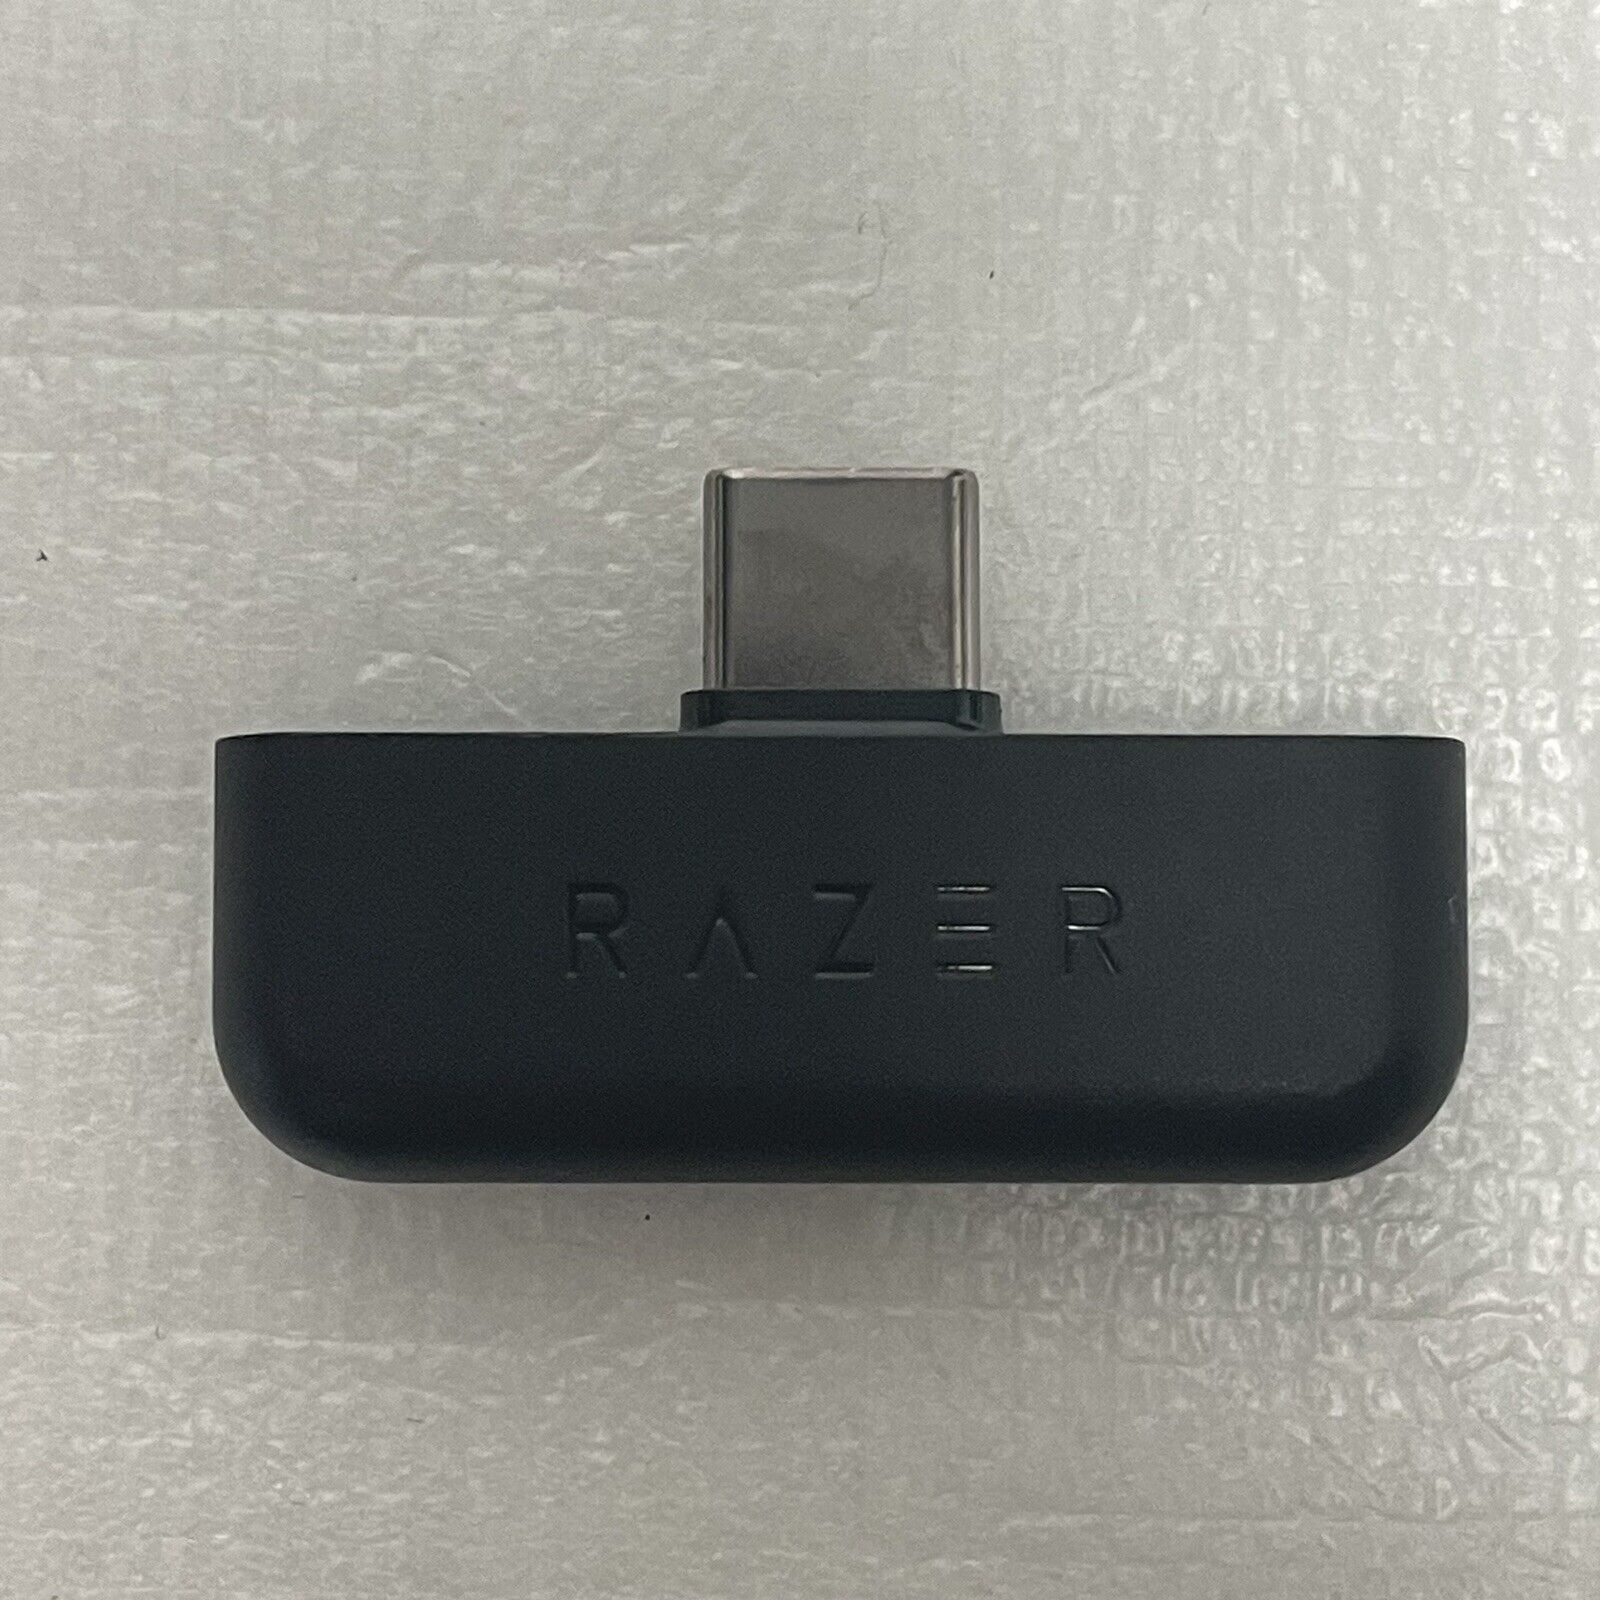 USB 2.4G Receiver for Razer Barracuda X Wireless Headphones RC30-0380 Adapter